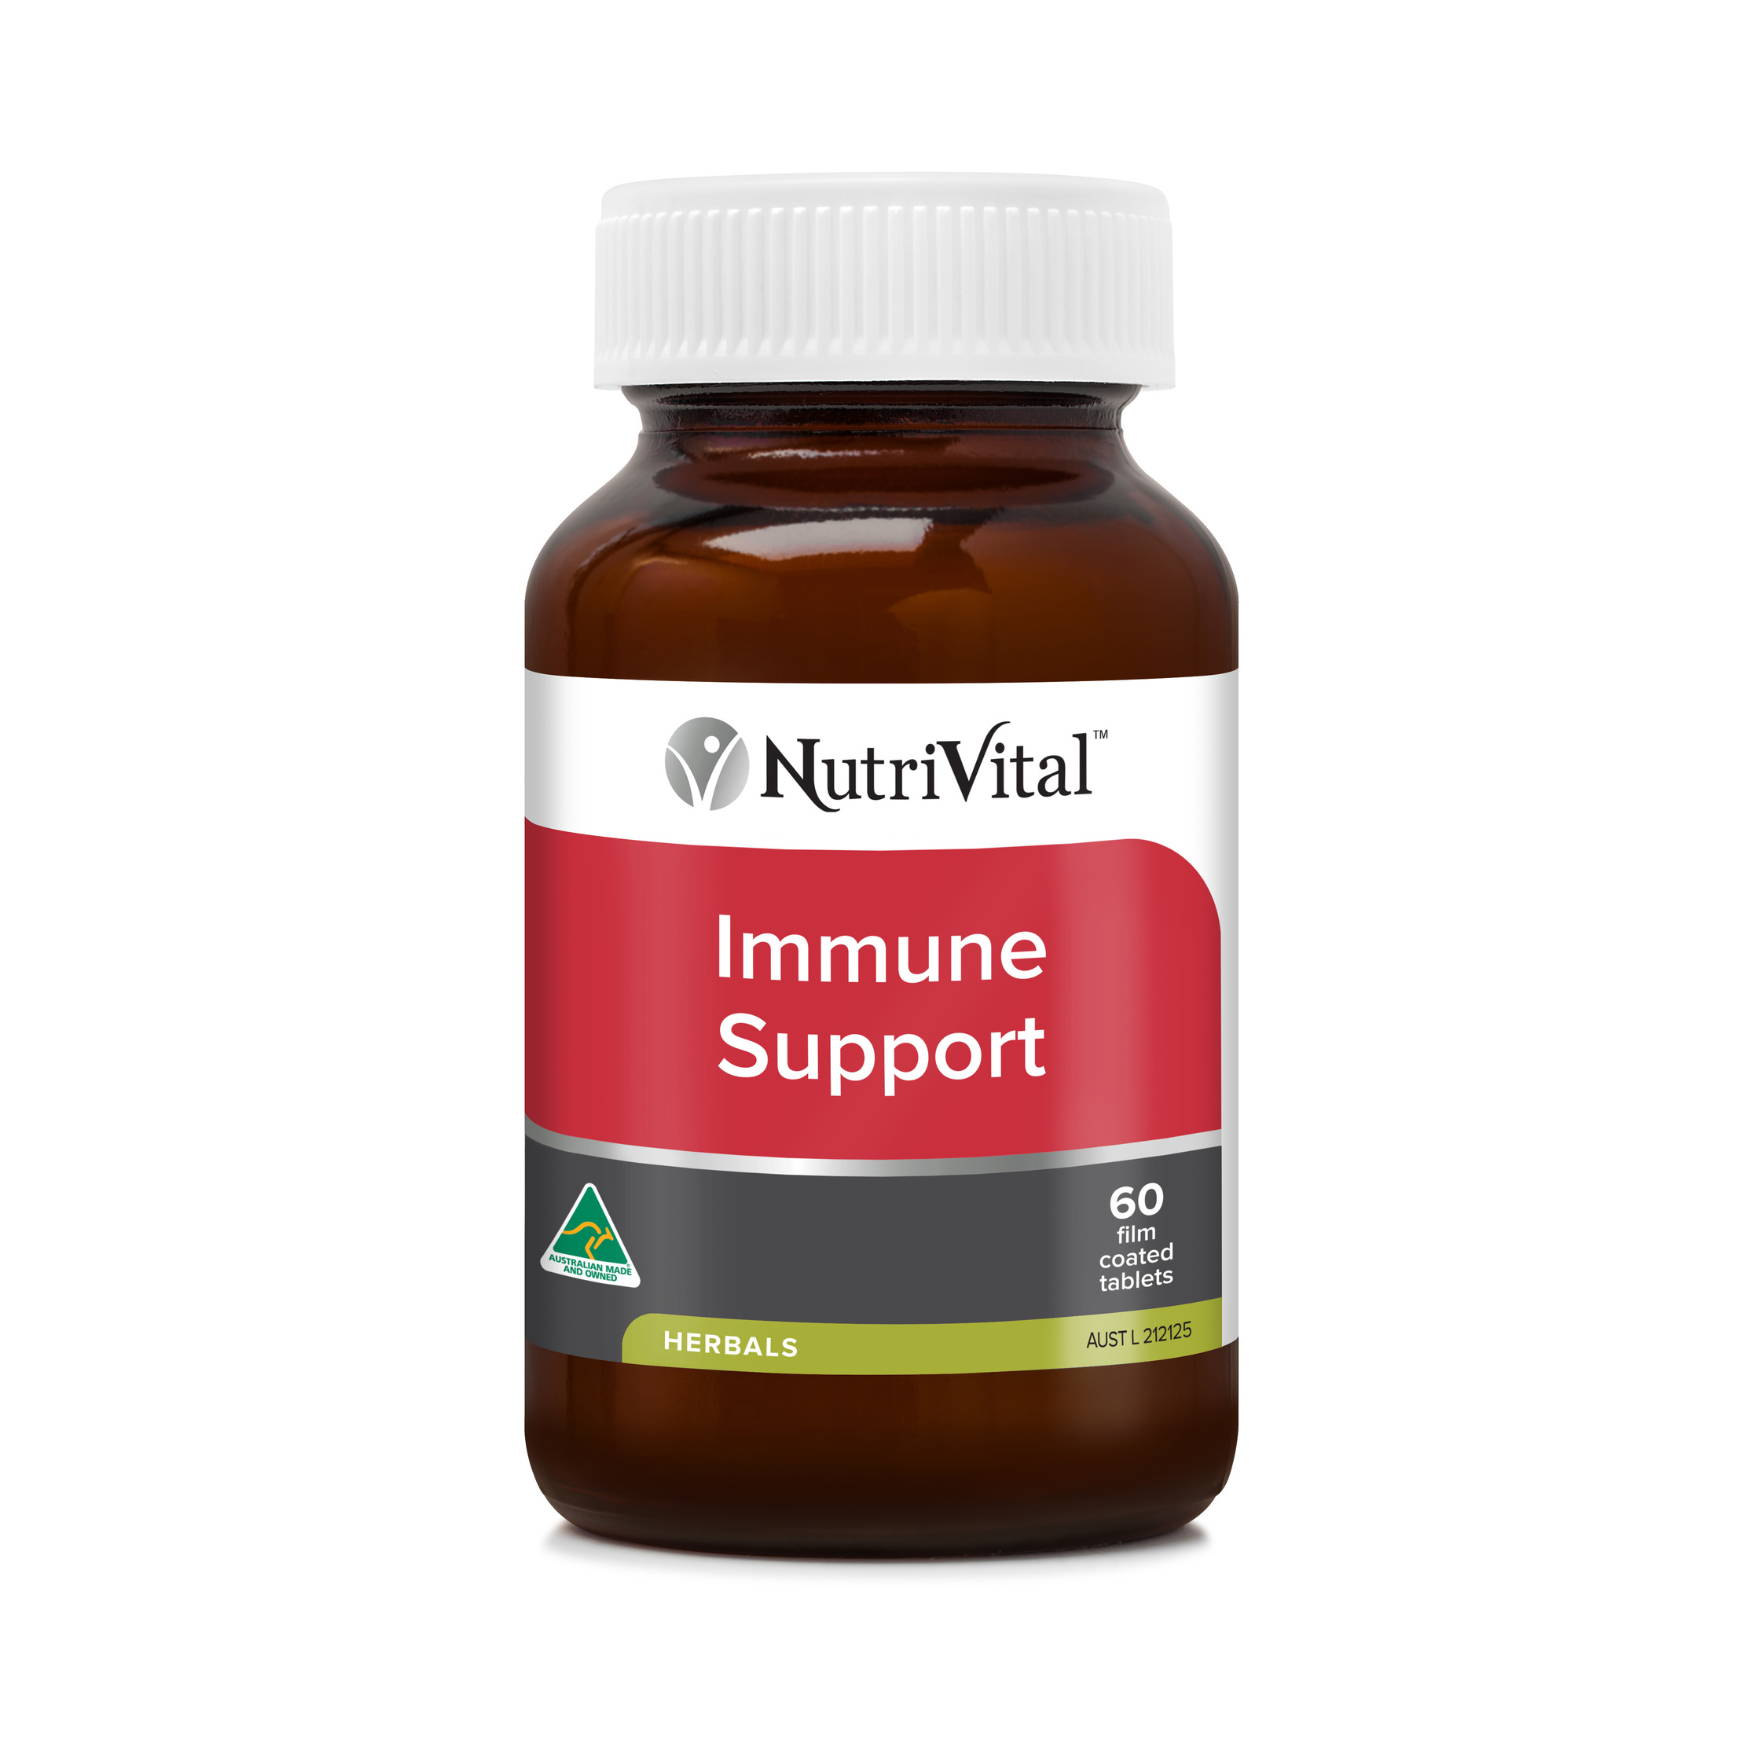 NutriVital Immune Support Tablets